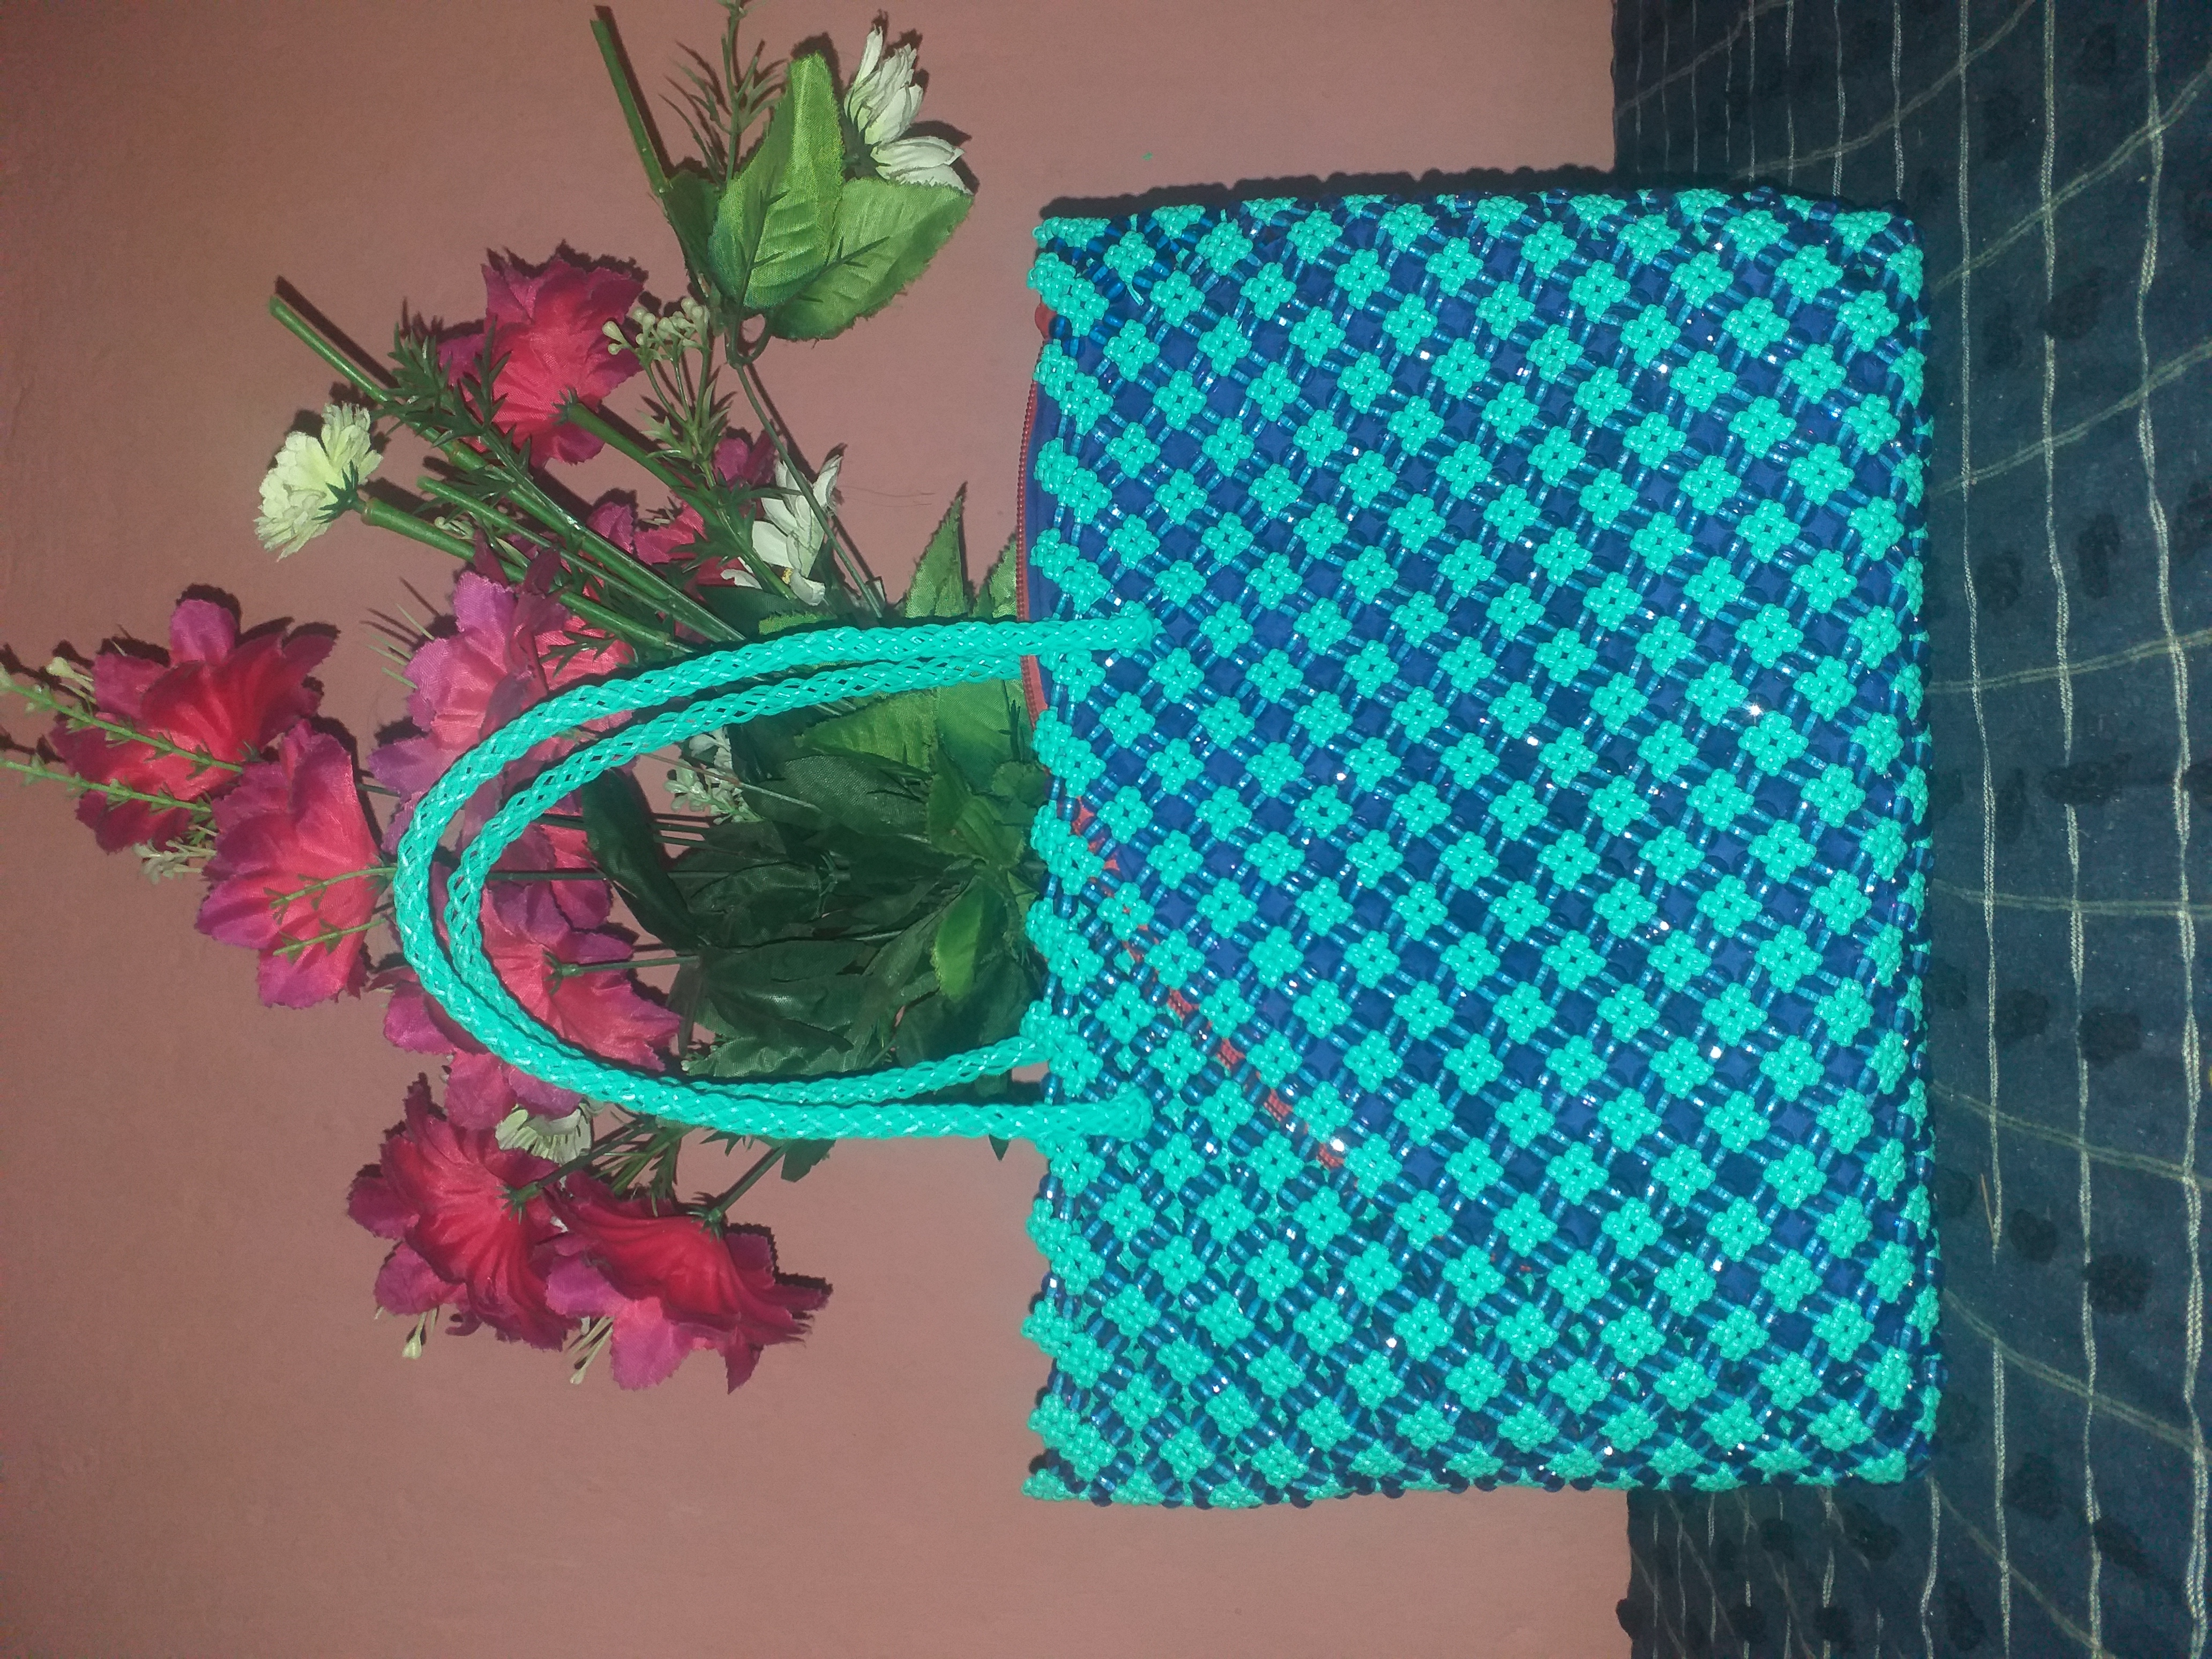 How to make beads bag | putir bag| sangitas craft - YouTube